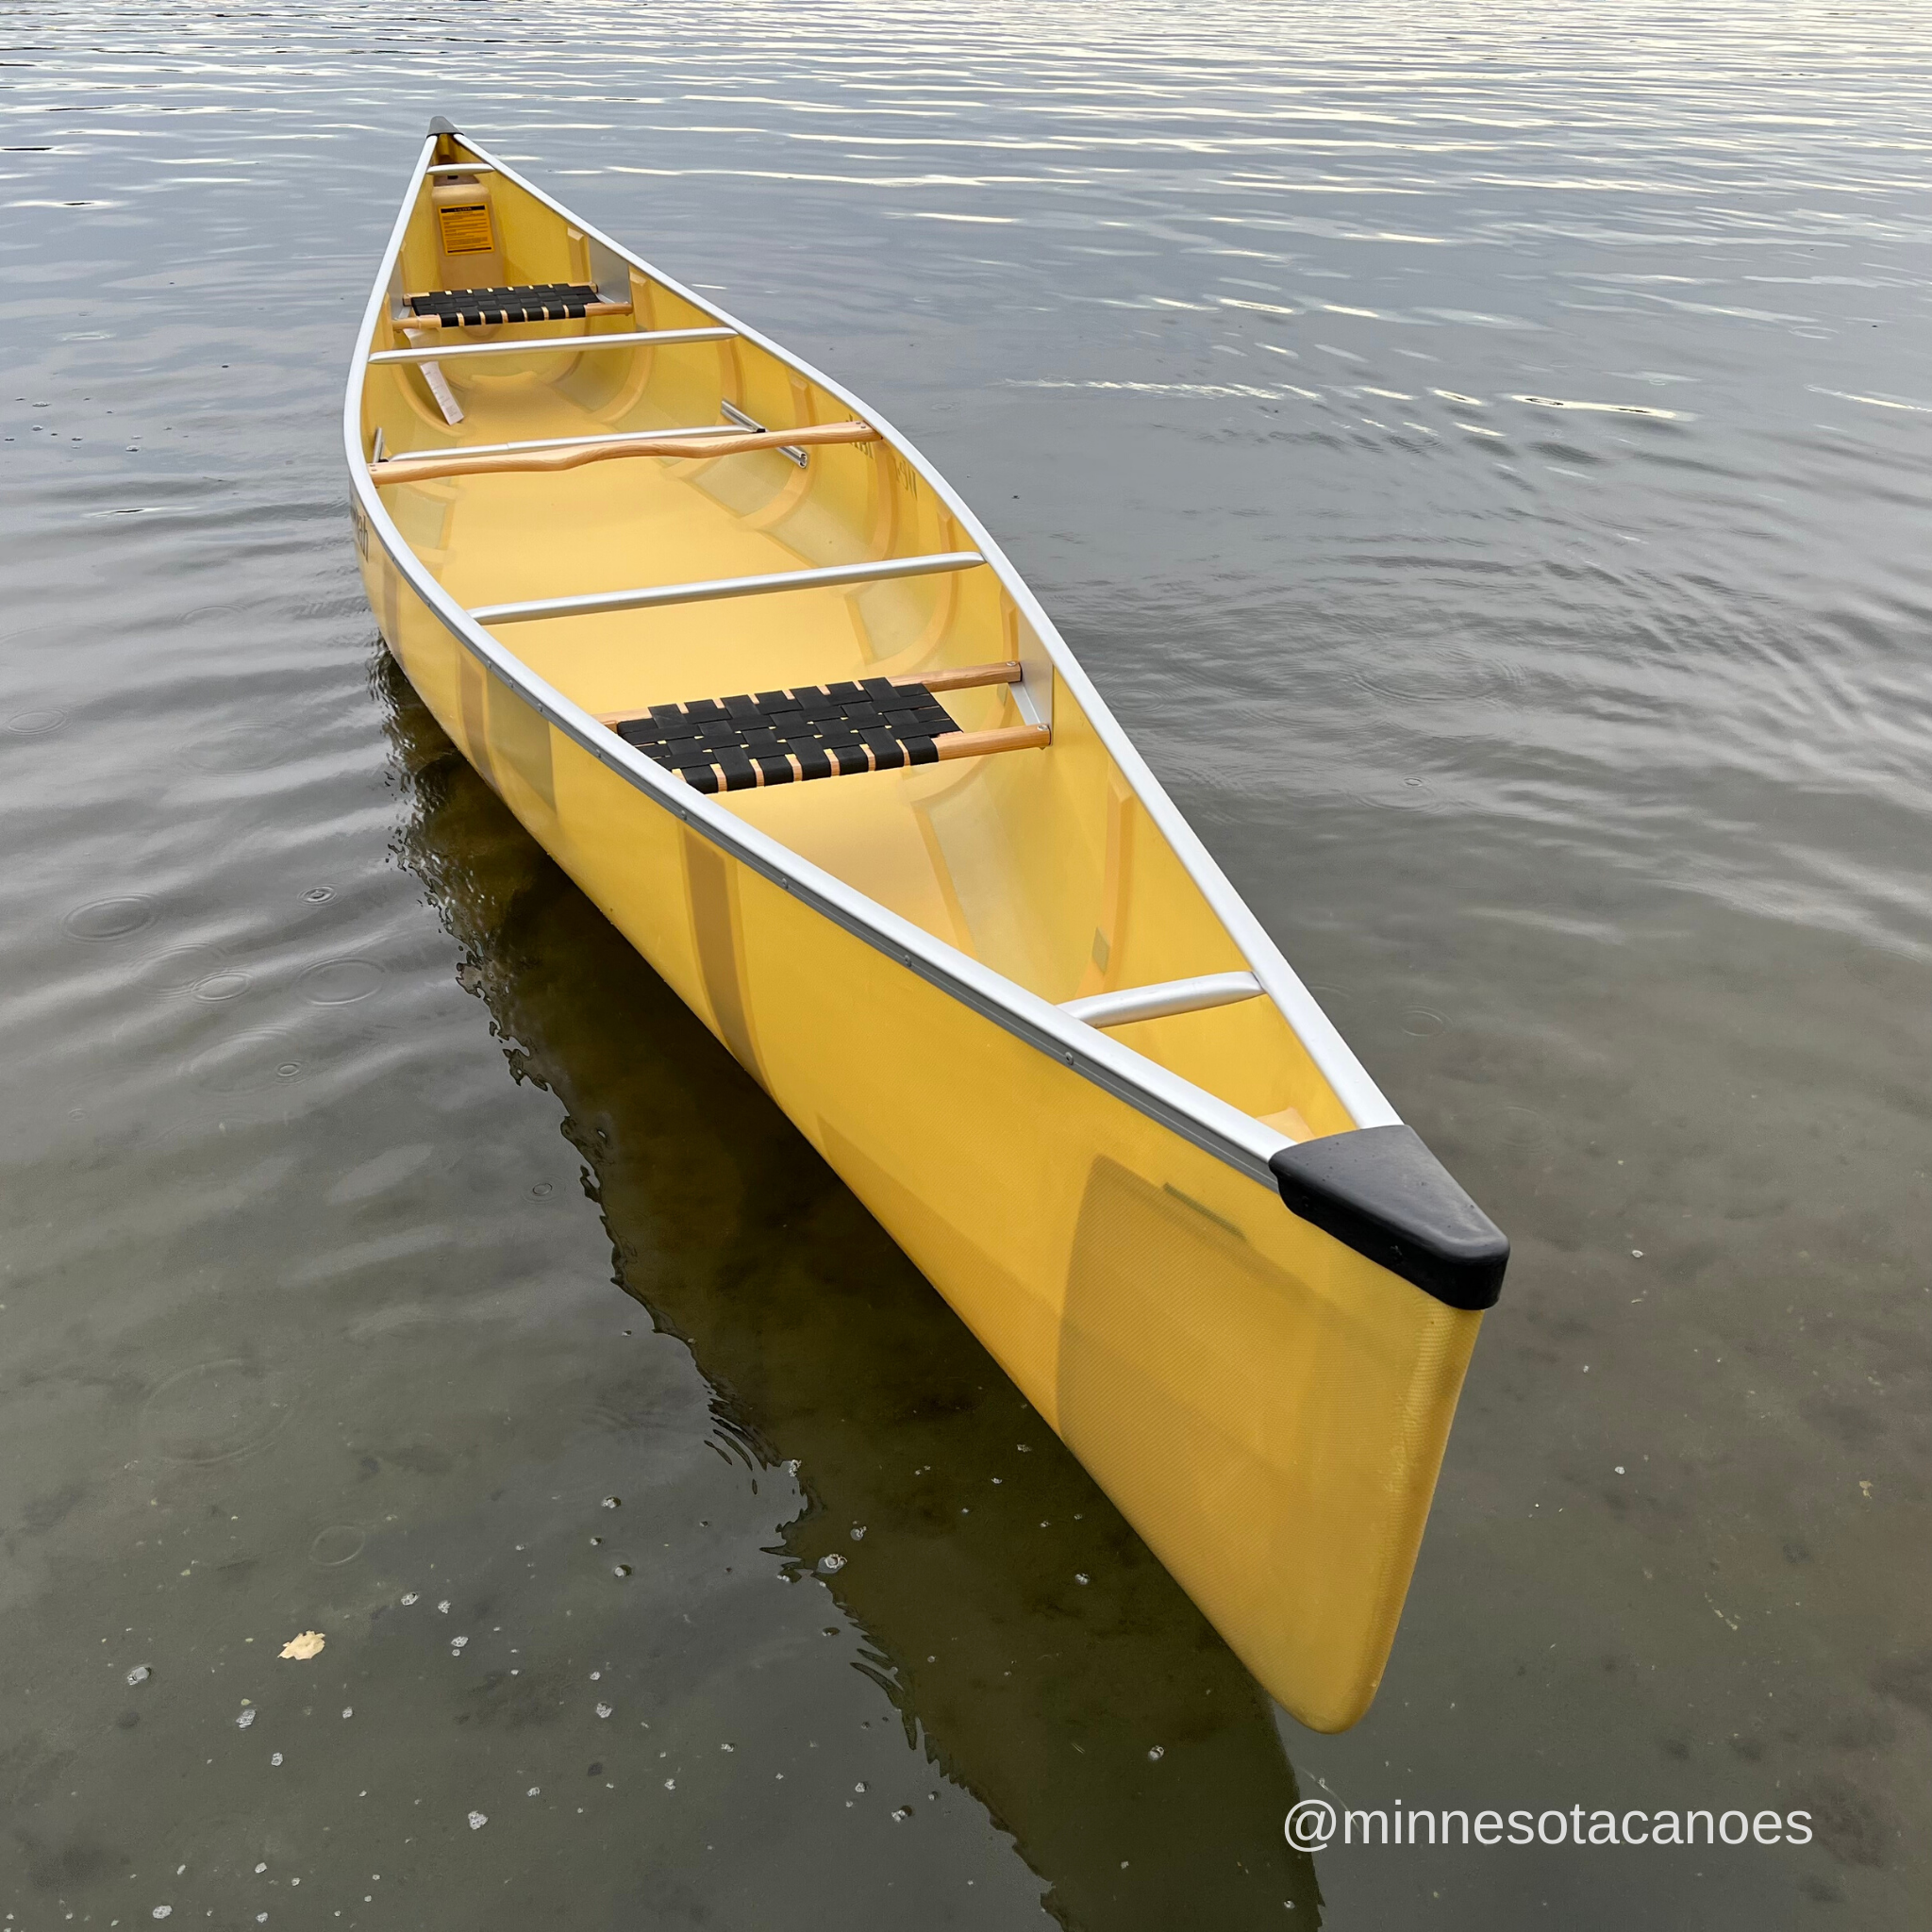 SPIRIT II (17' 0") Aramid Ultra-light w/Silver Trim Tandem Wenonah Canoe